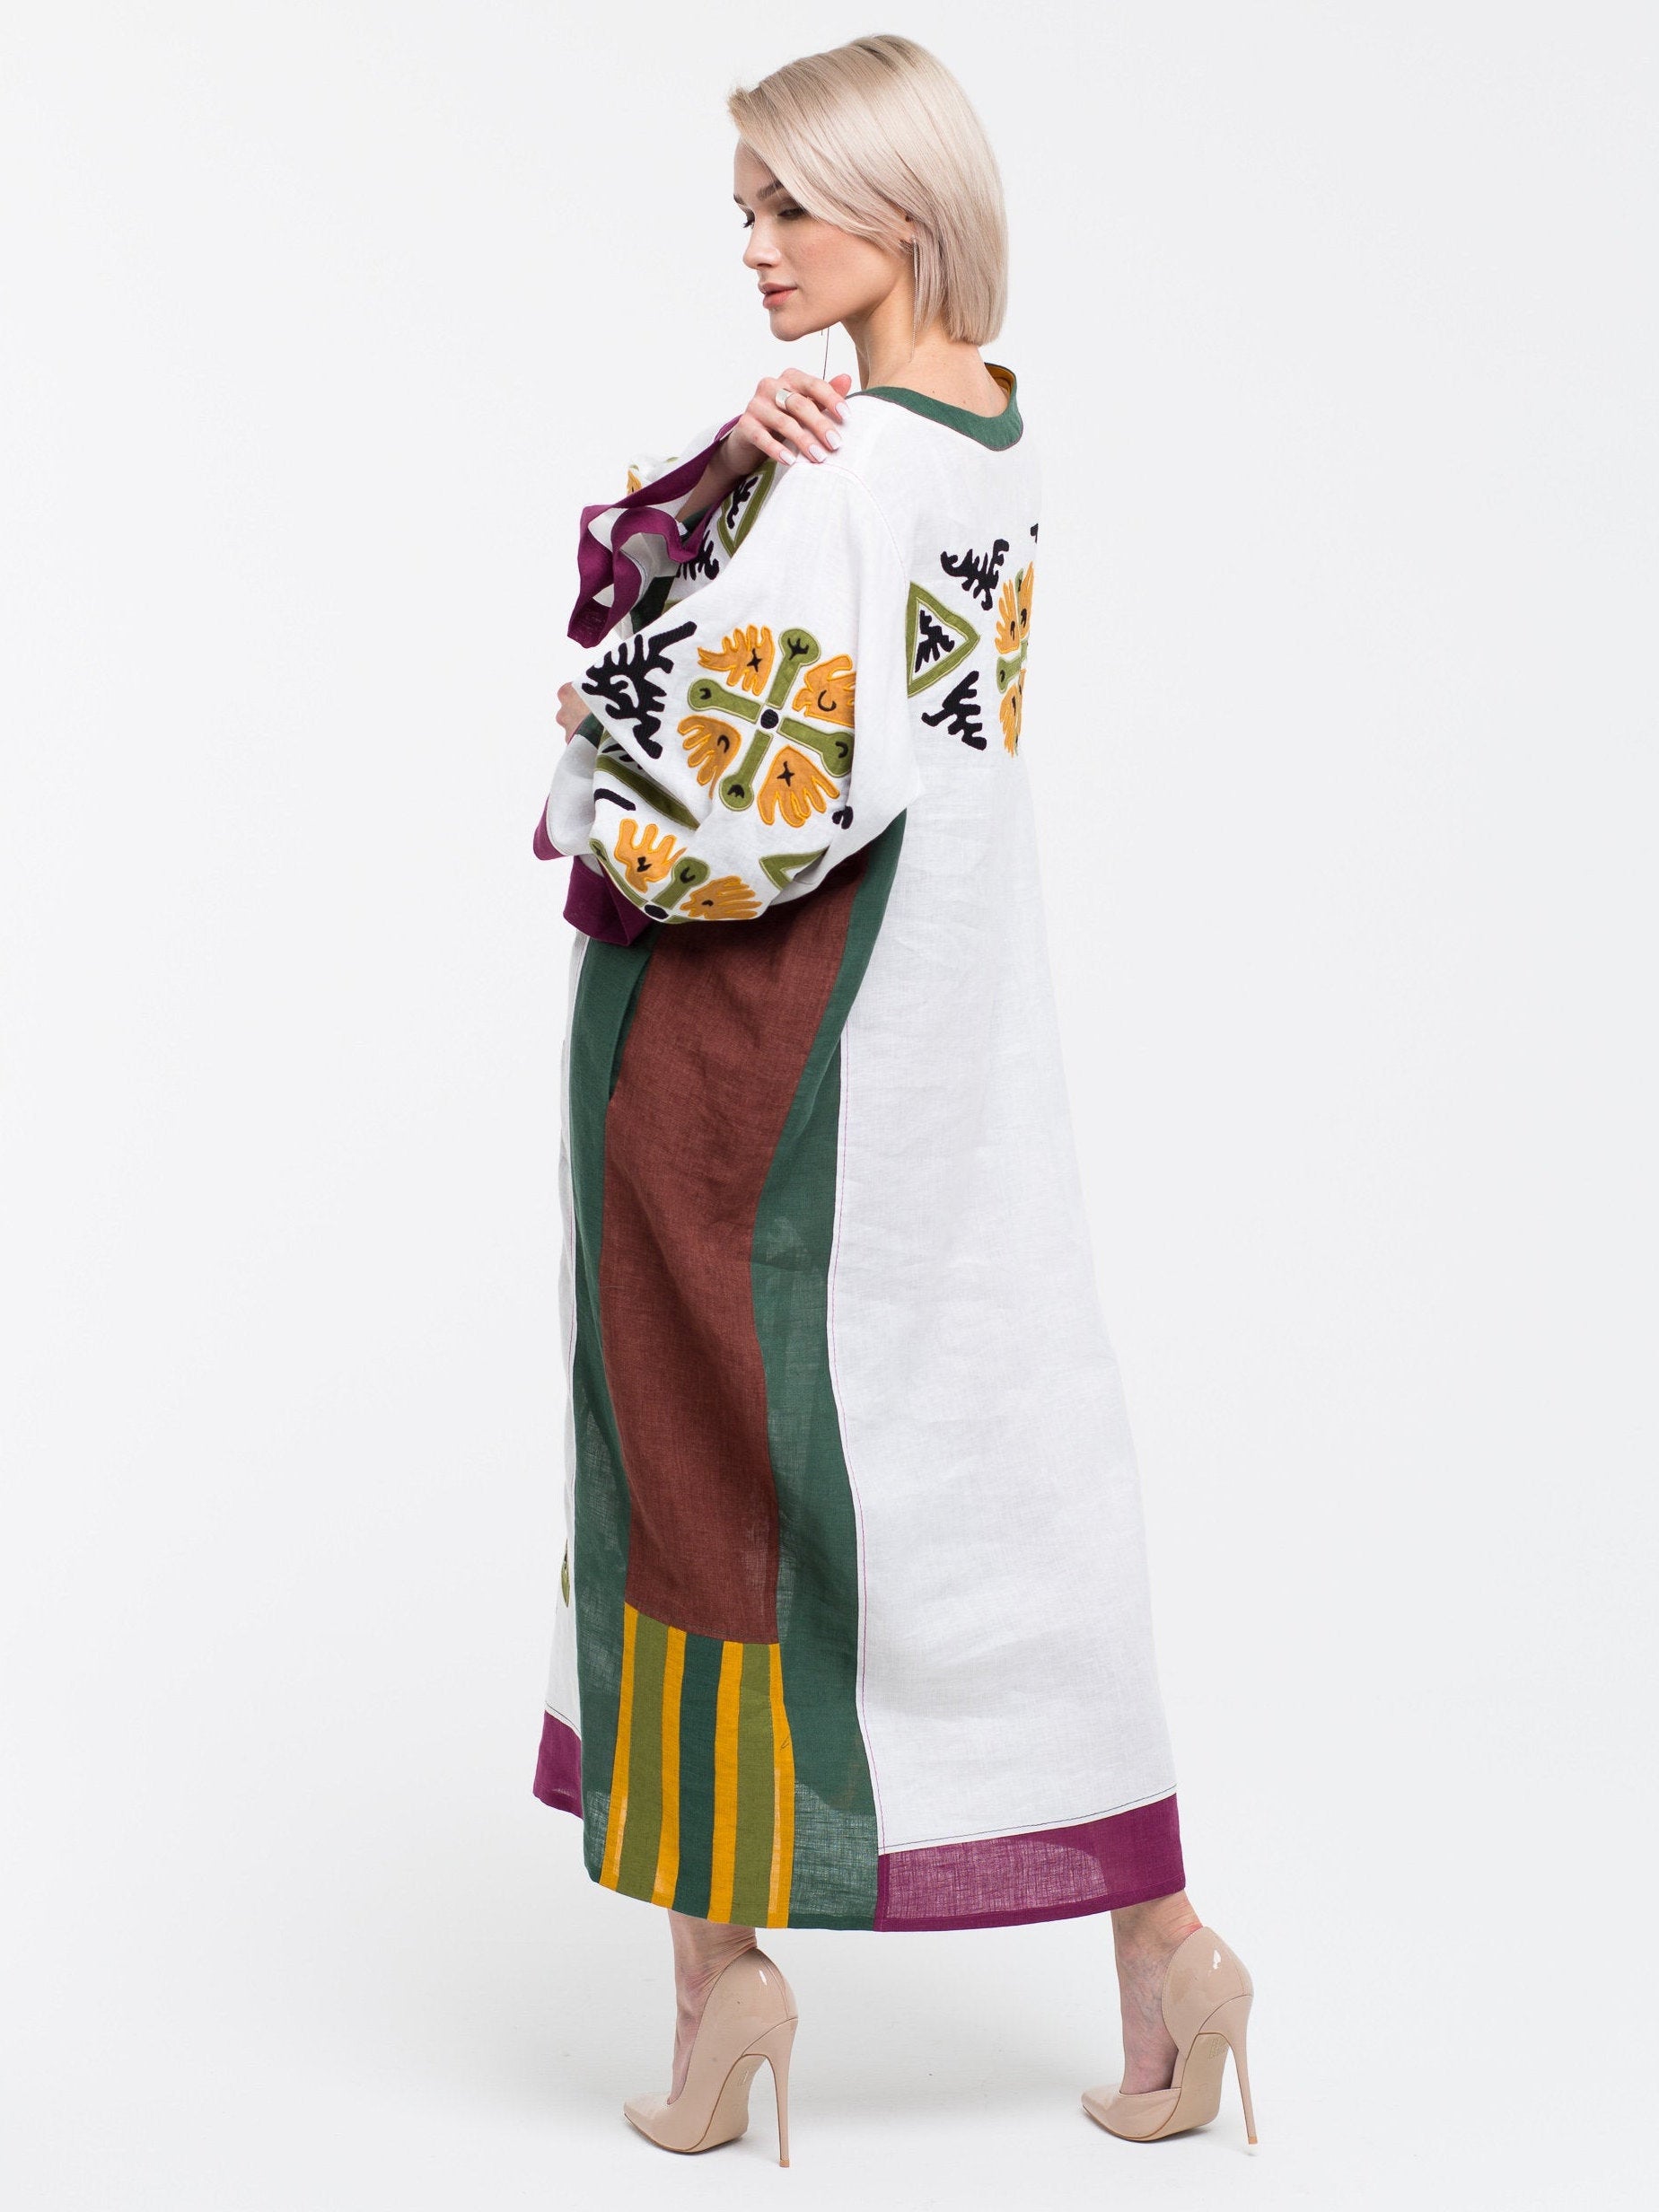 Kaitag applique embroidered linen dress Oversized boho kaftan S-XL